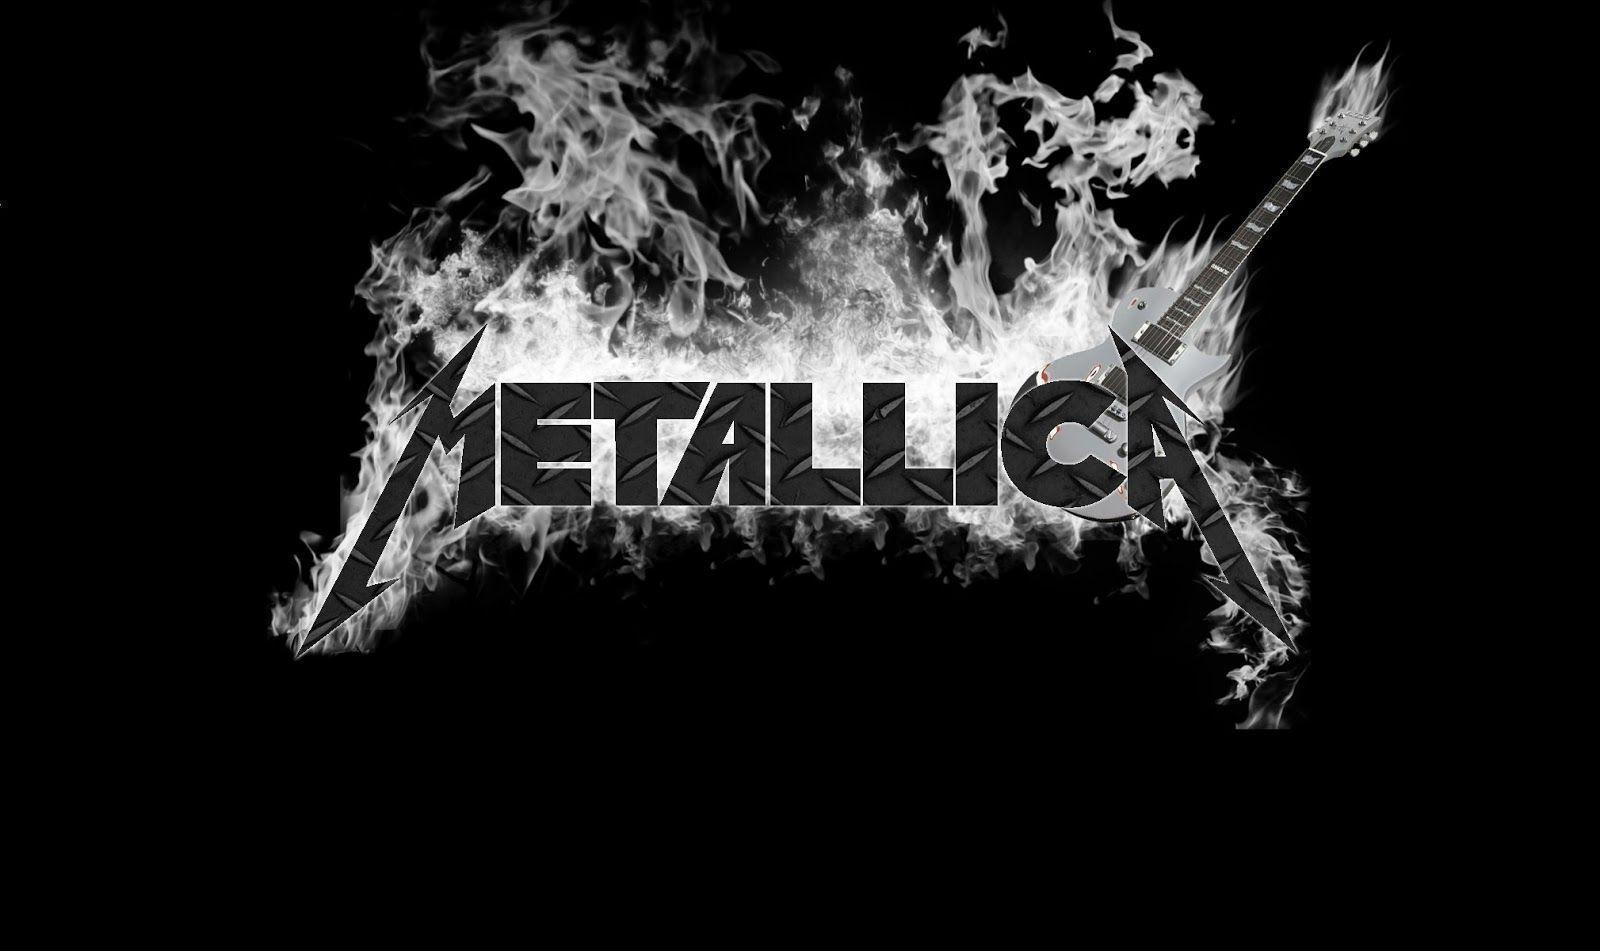 Wallpaper For > Metallica Black Album Wallpaper